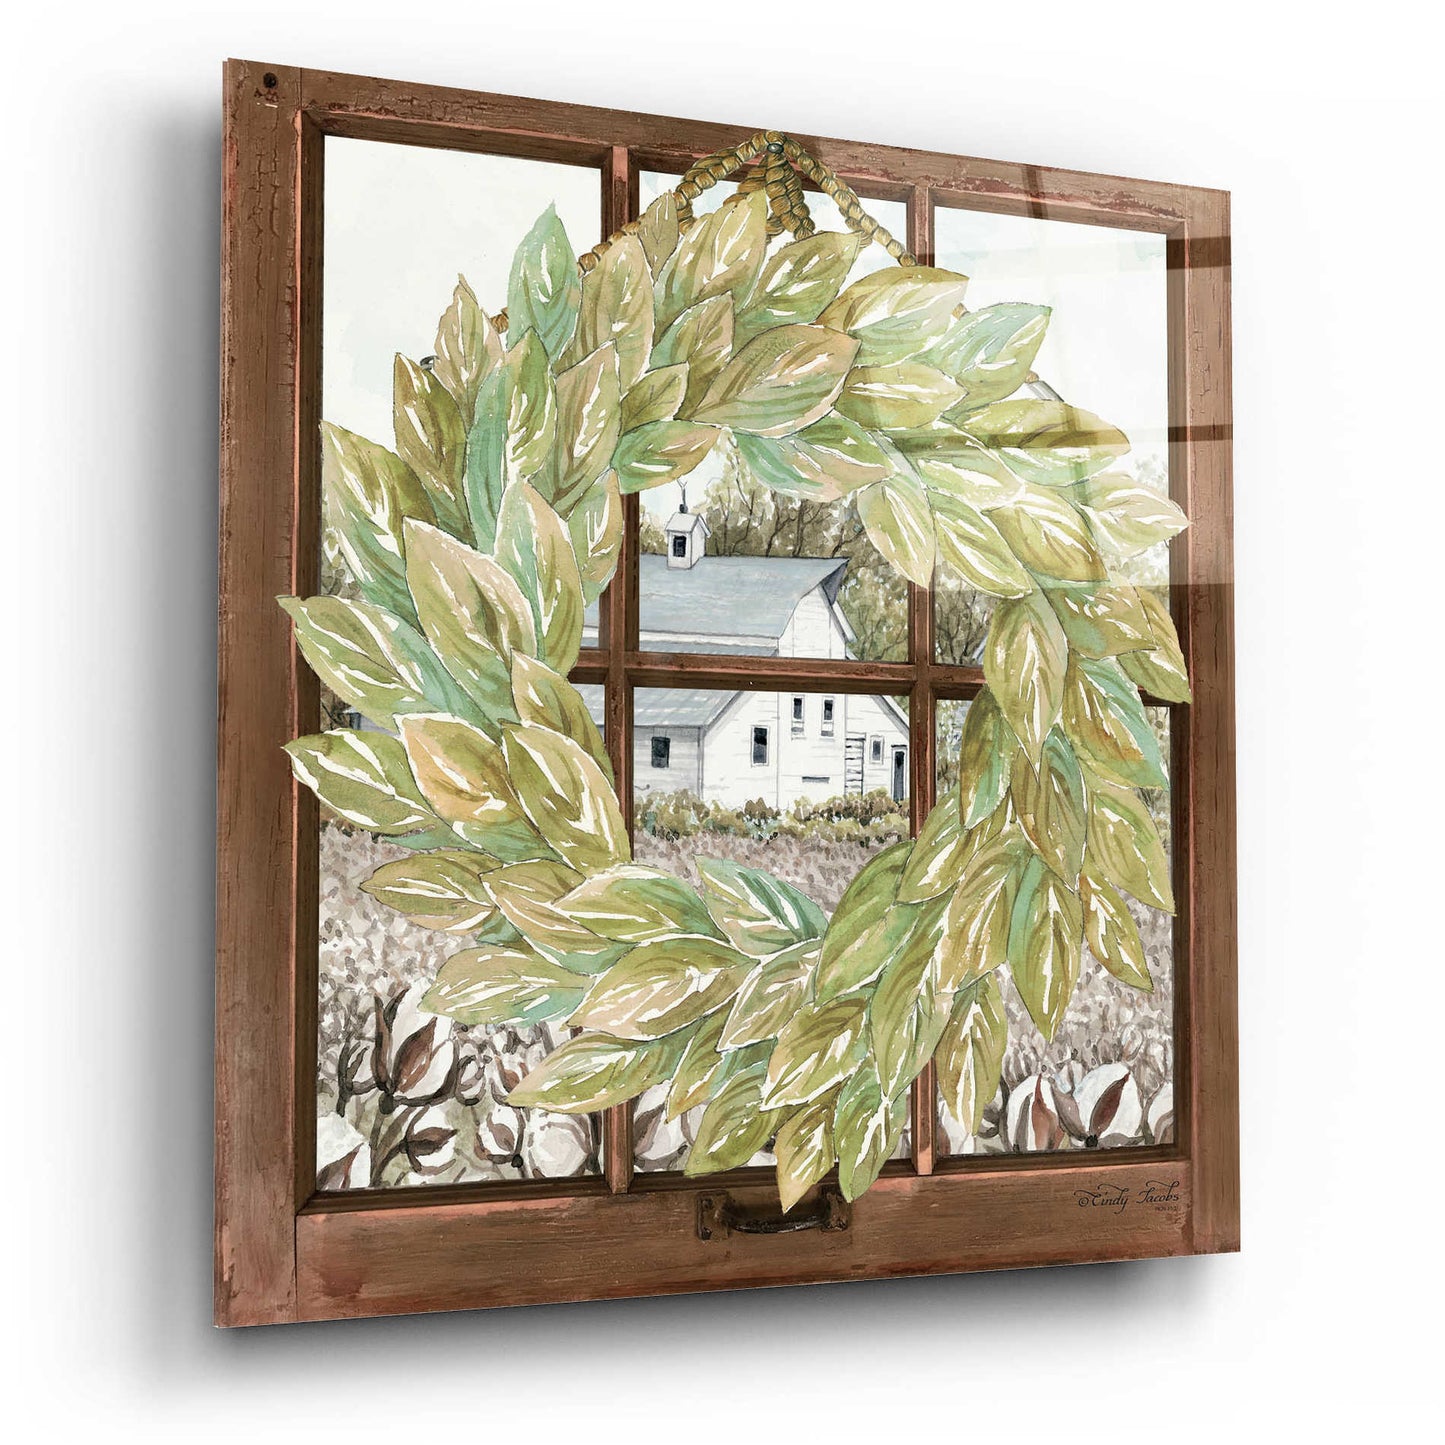 Epic Art 'Country Windowpane' by Cindy Jacobs, Acrylic Glass Wall Art,12x12